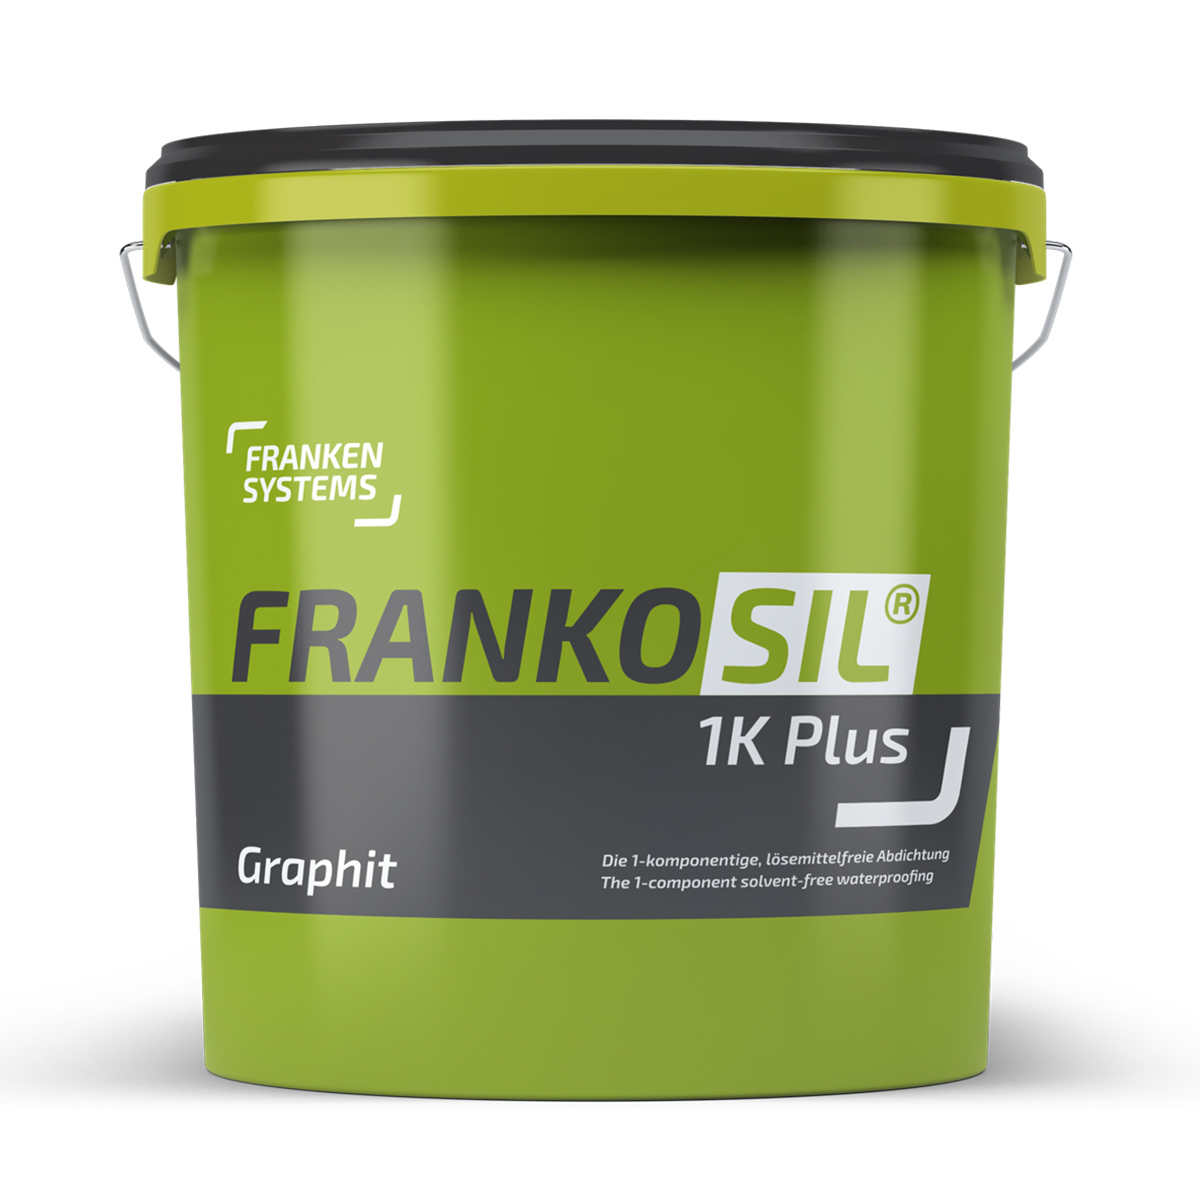 Frankosil 1K Plus Abdichtung, graphit 6 kg Kunststoffgebinde, B91-716-E55 - 1 Stk.